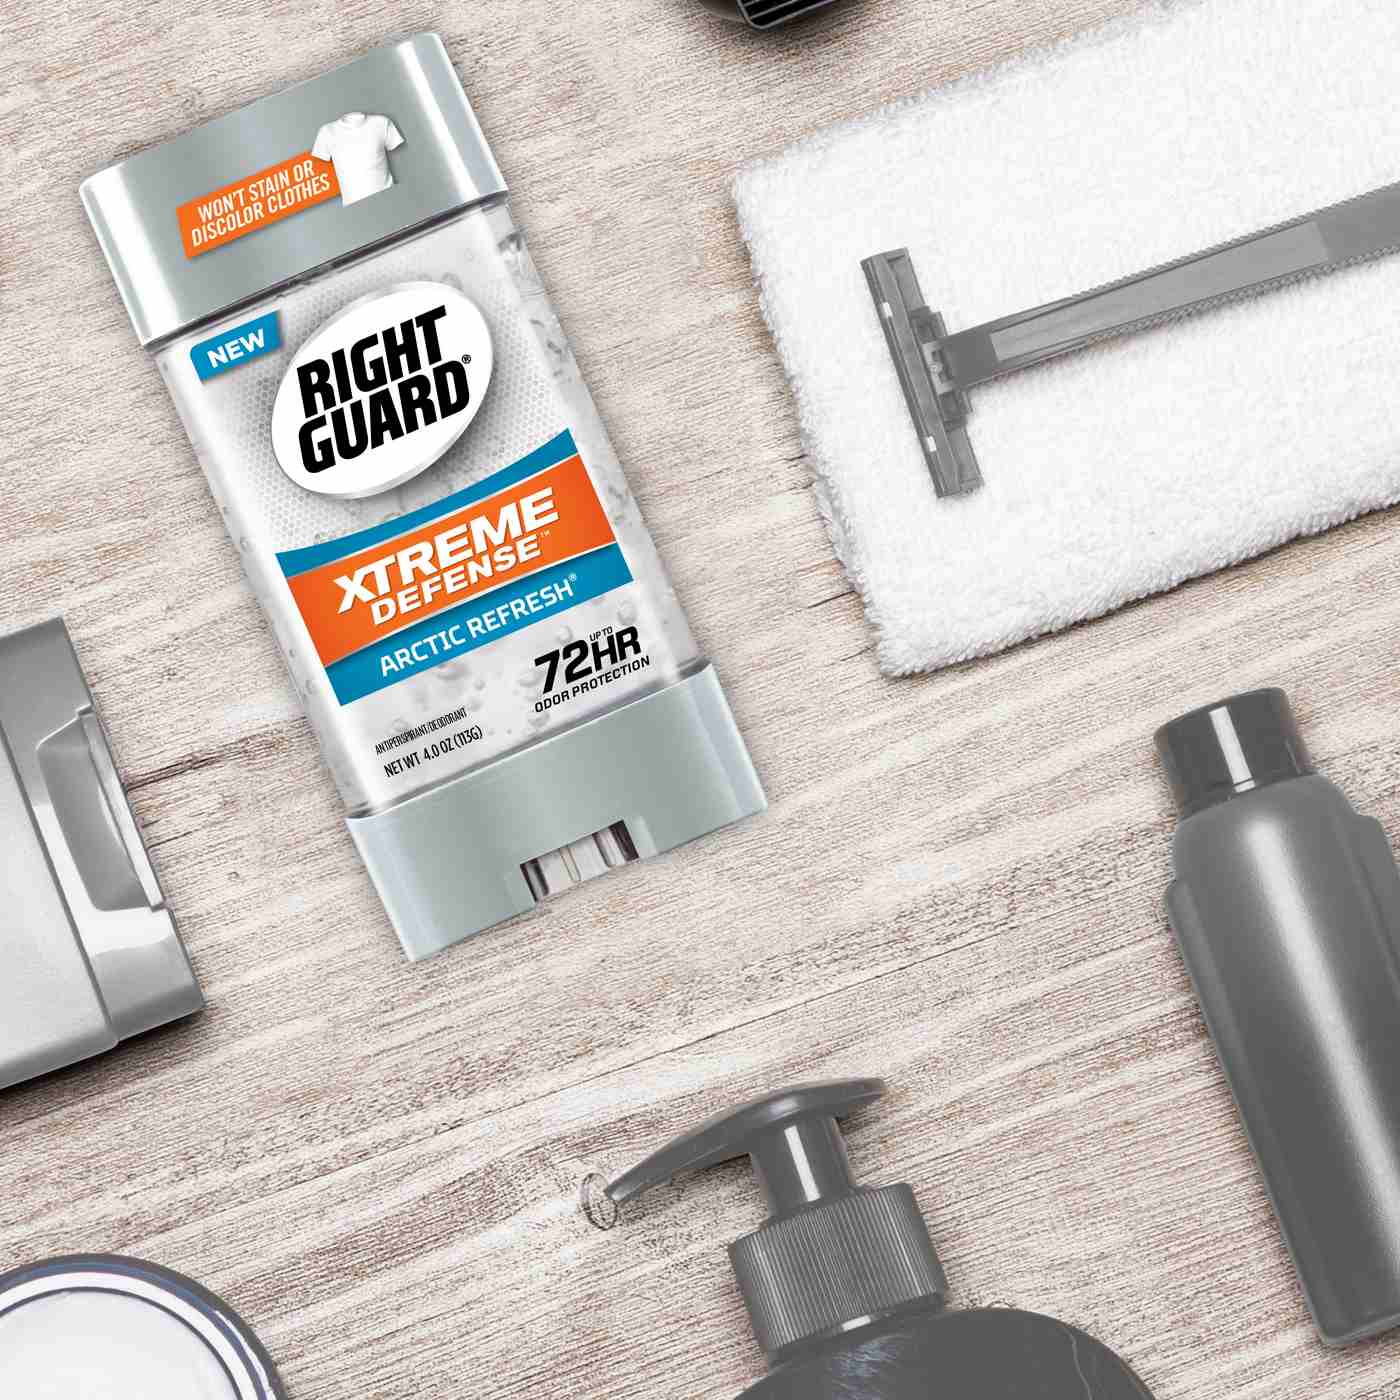 Right Guard Xtreme Defense Antiperspirant Deodorant Gel, Arctic Refresh; image 2 of 6